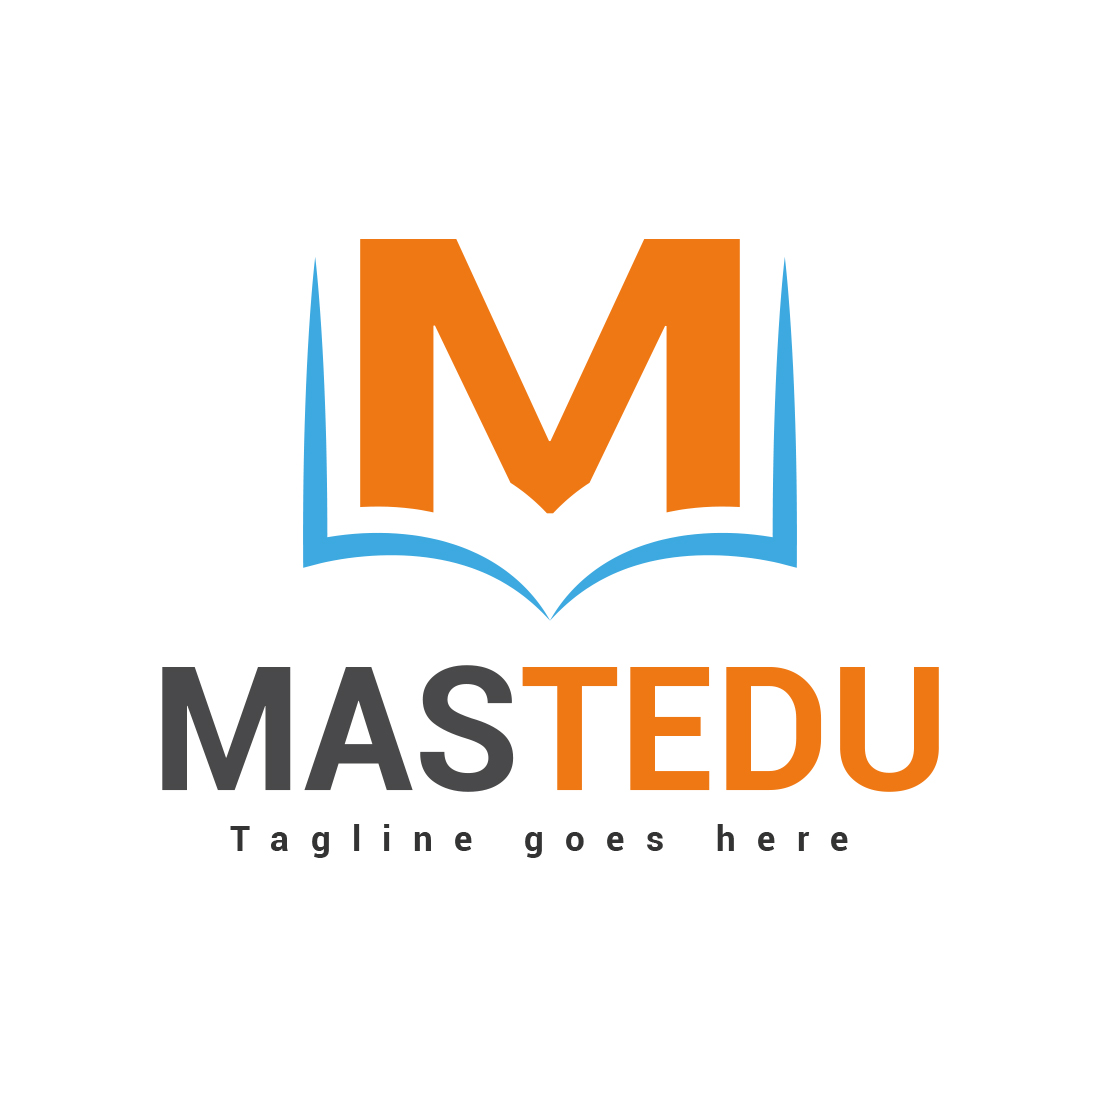 Letter M Educational logo design preview image.